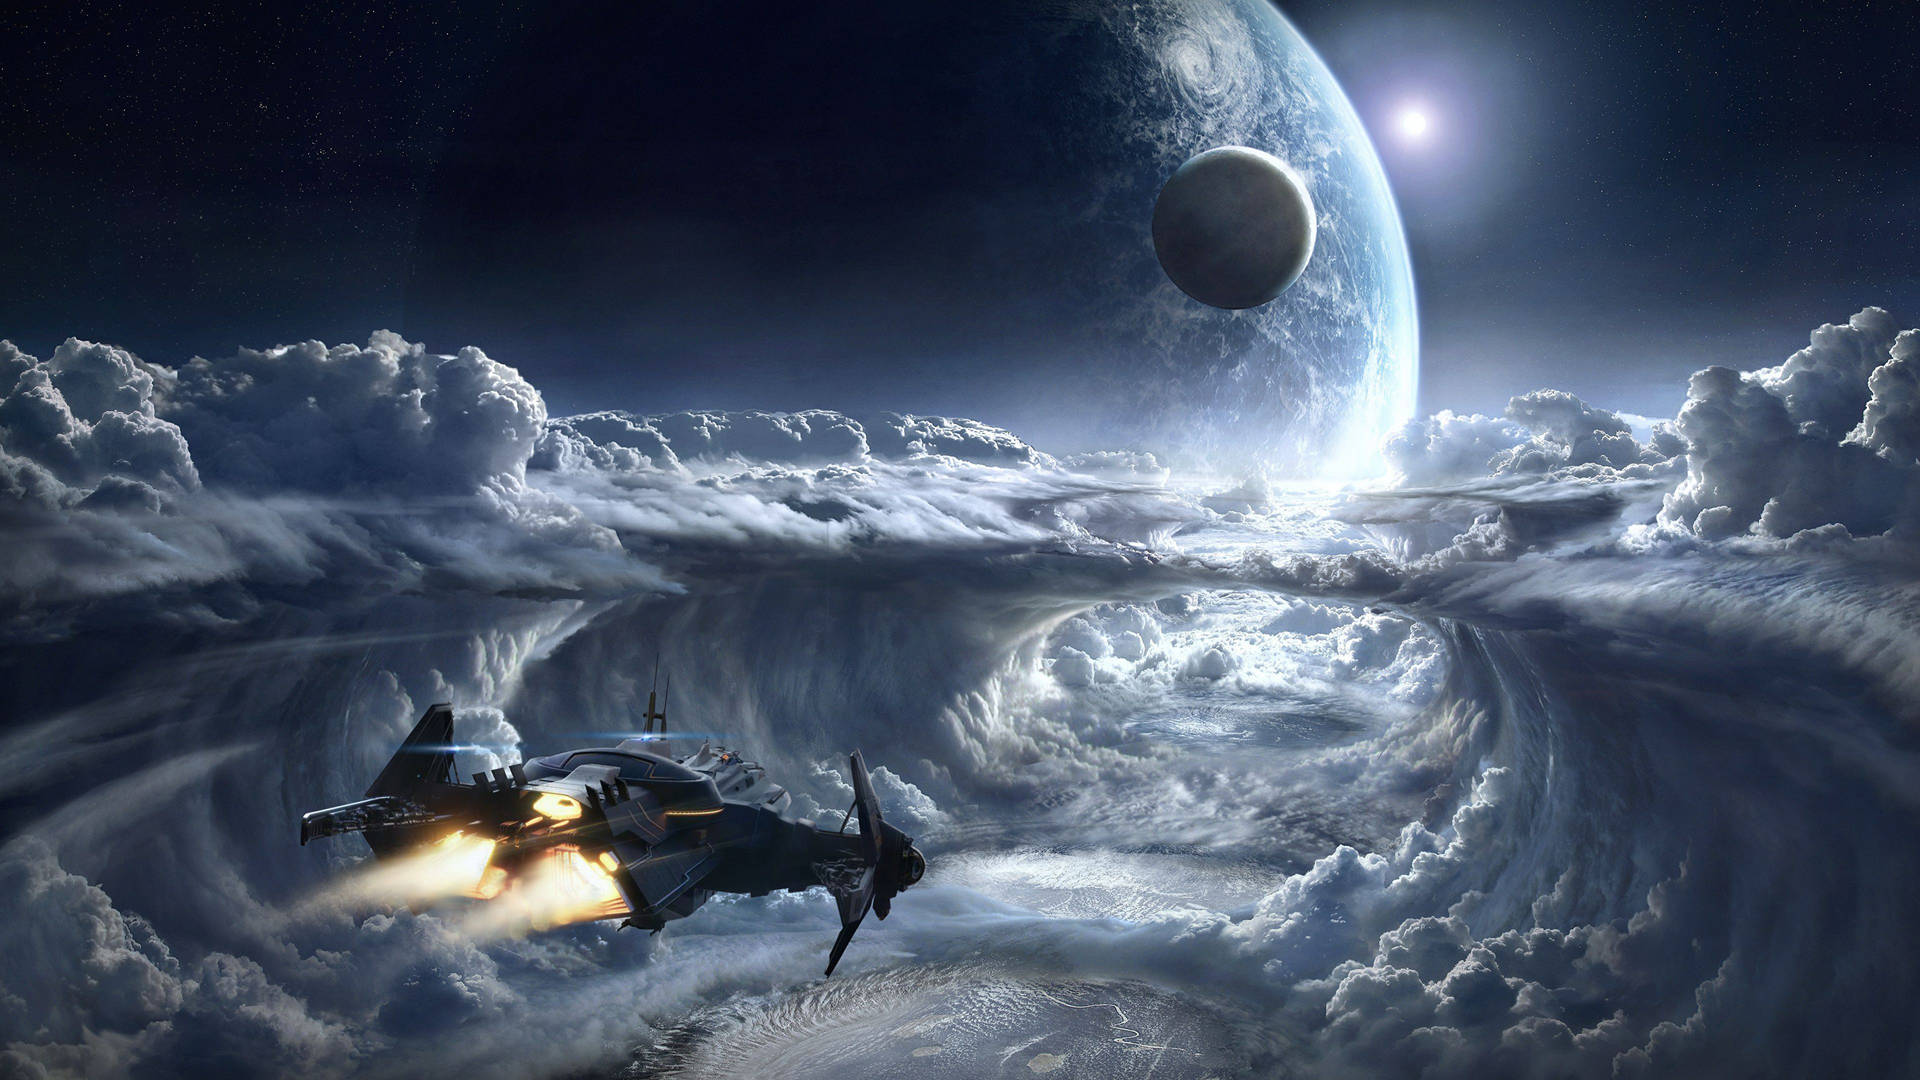 Space Ship Digital Art Background